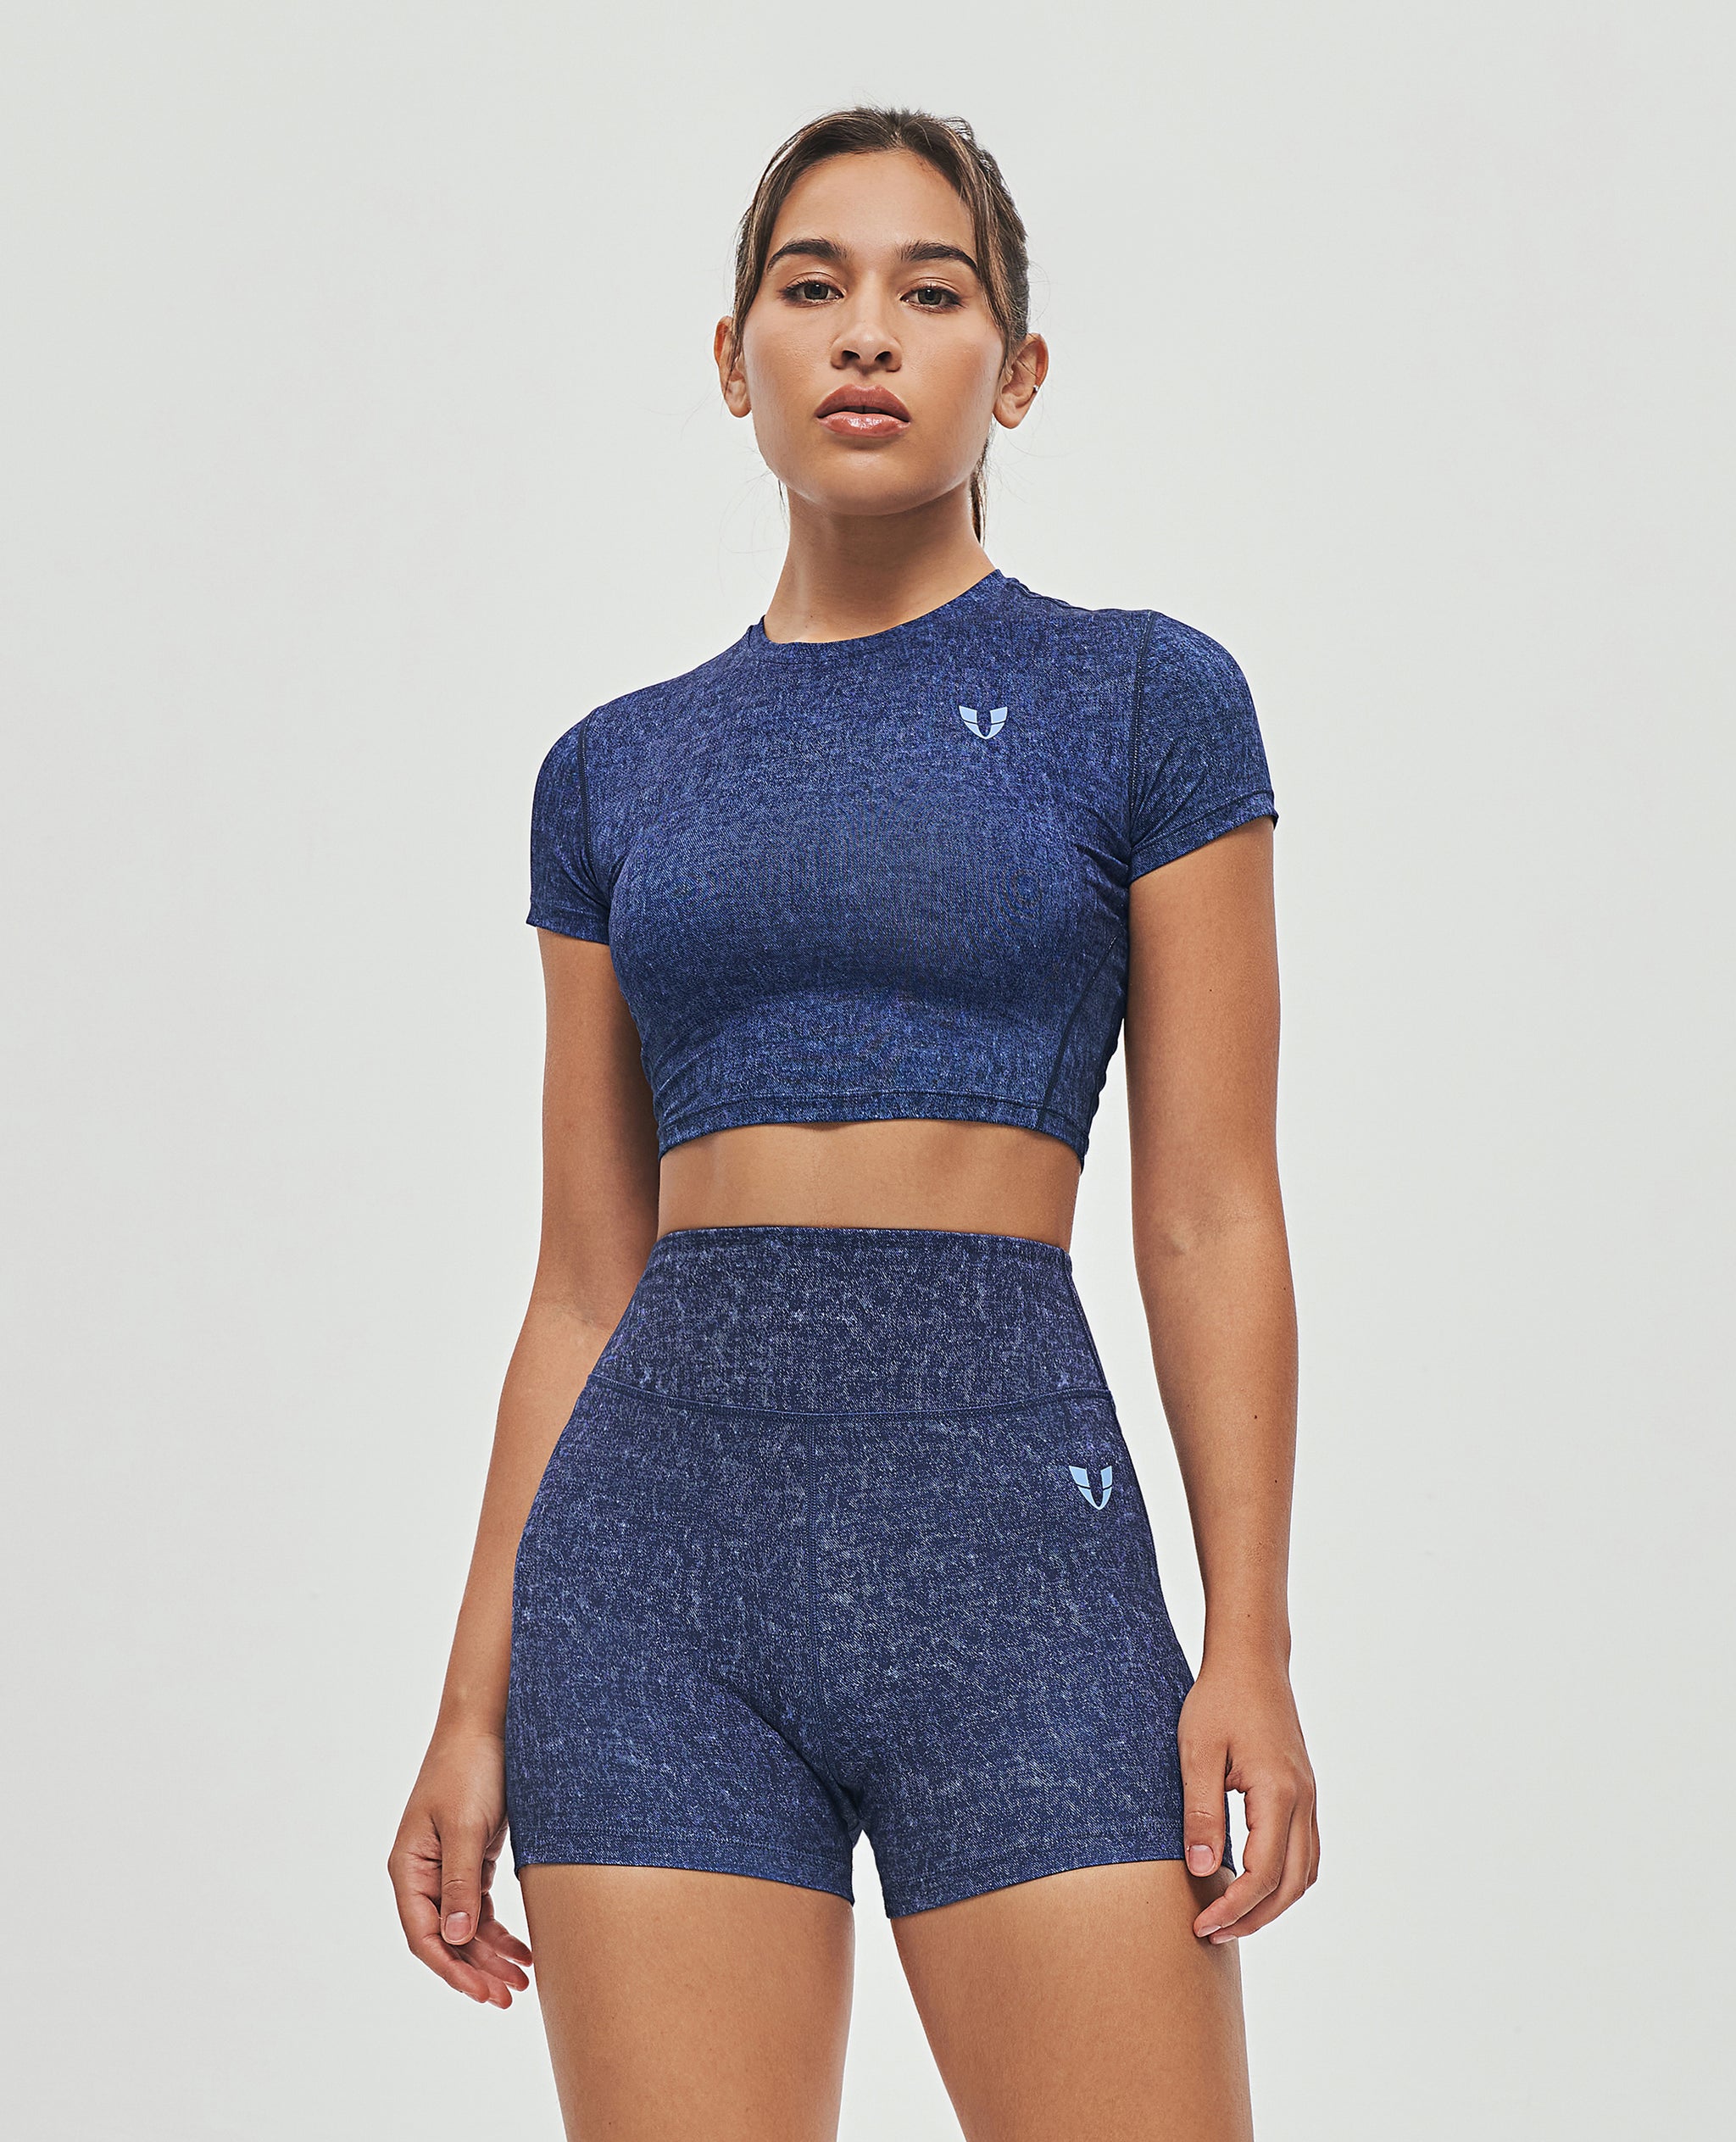 Short Sleeve Gym Crop Top Denim Blue | FIRM ABS